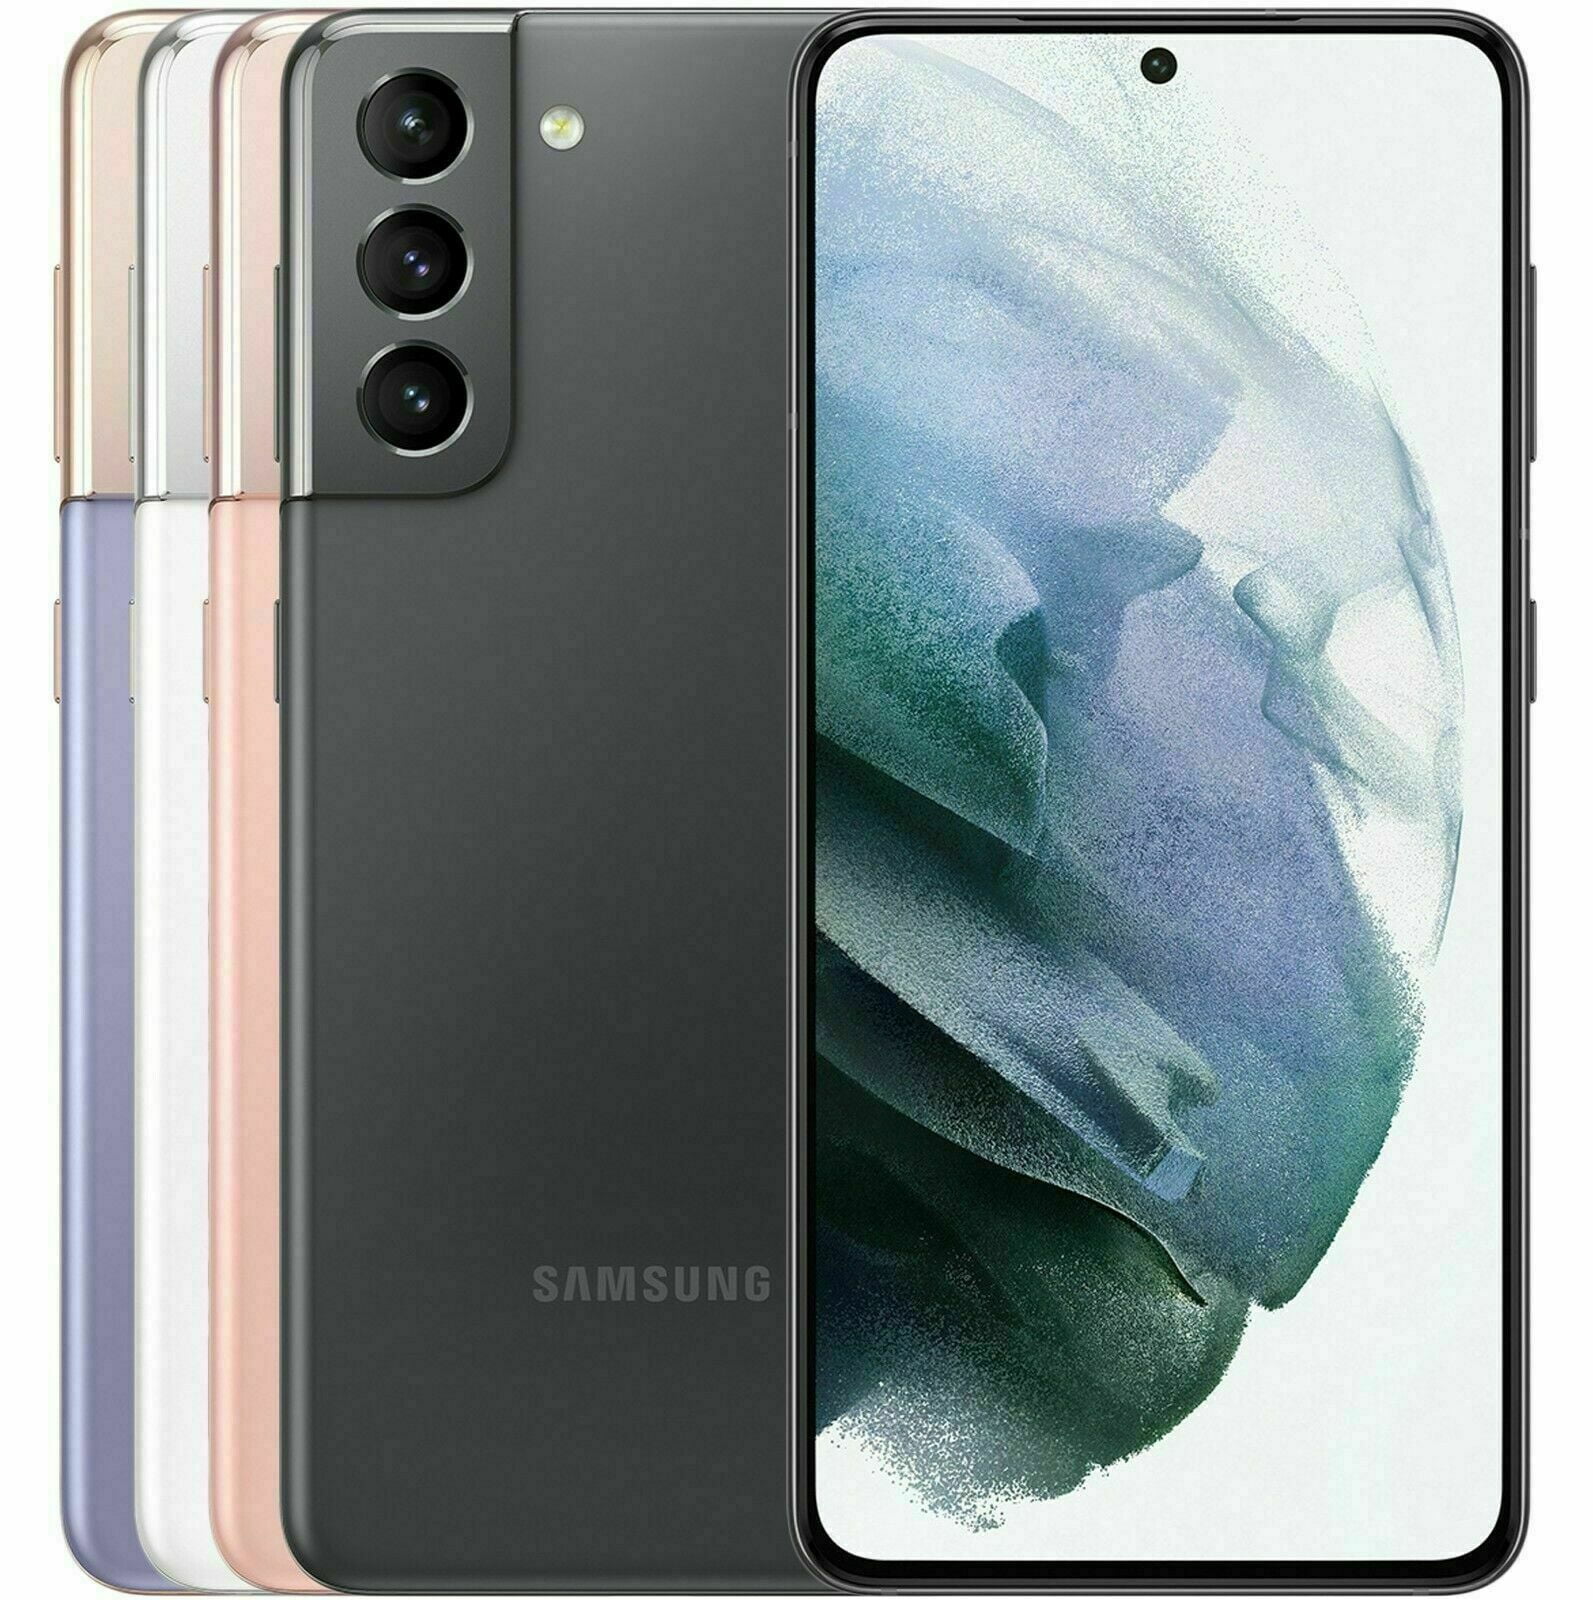 Samsung Galaxy S21 5G SM-G991U1 128GB Gray US Model India